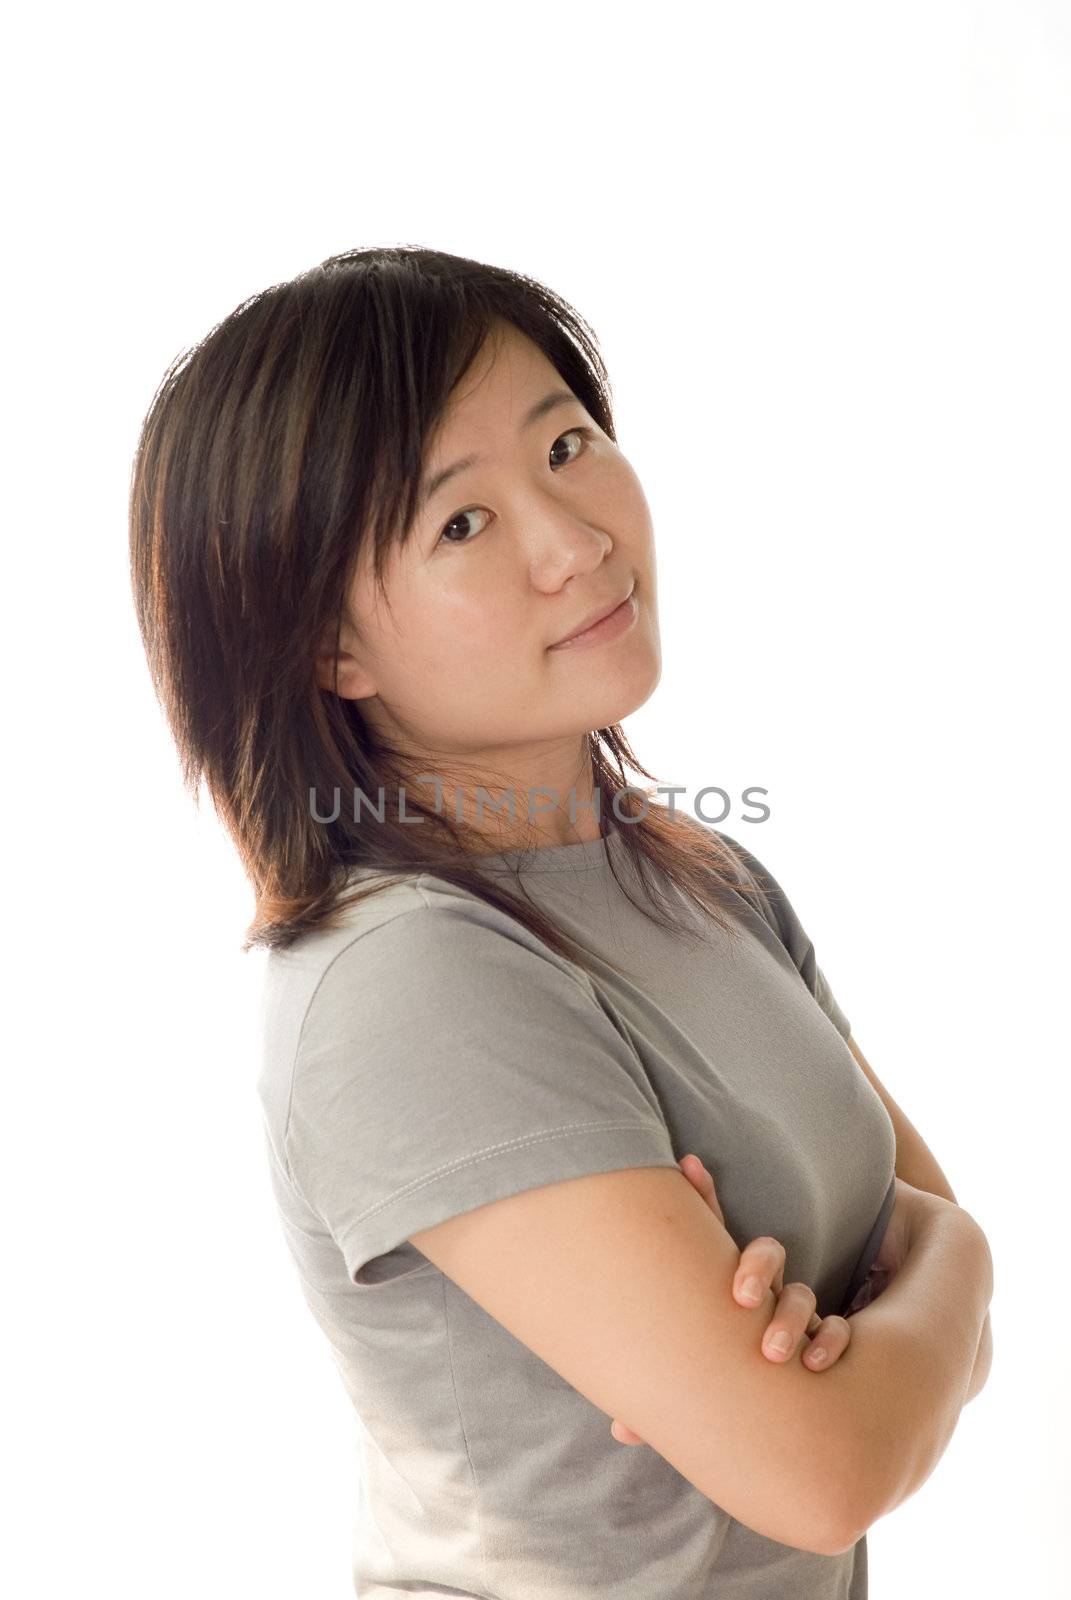 Sport Asian woman portrait on white background.